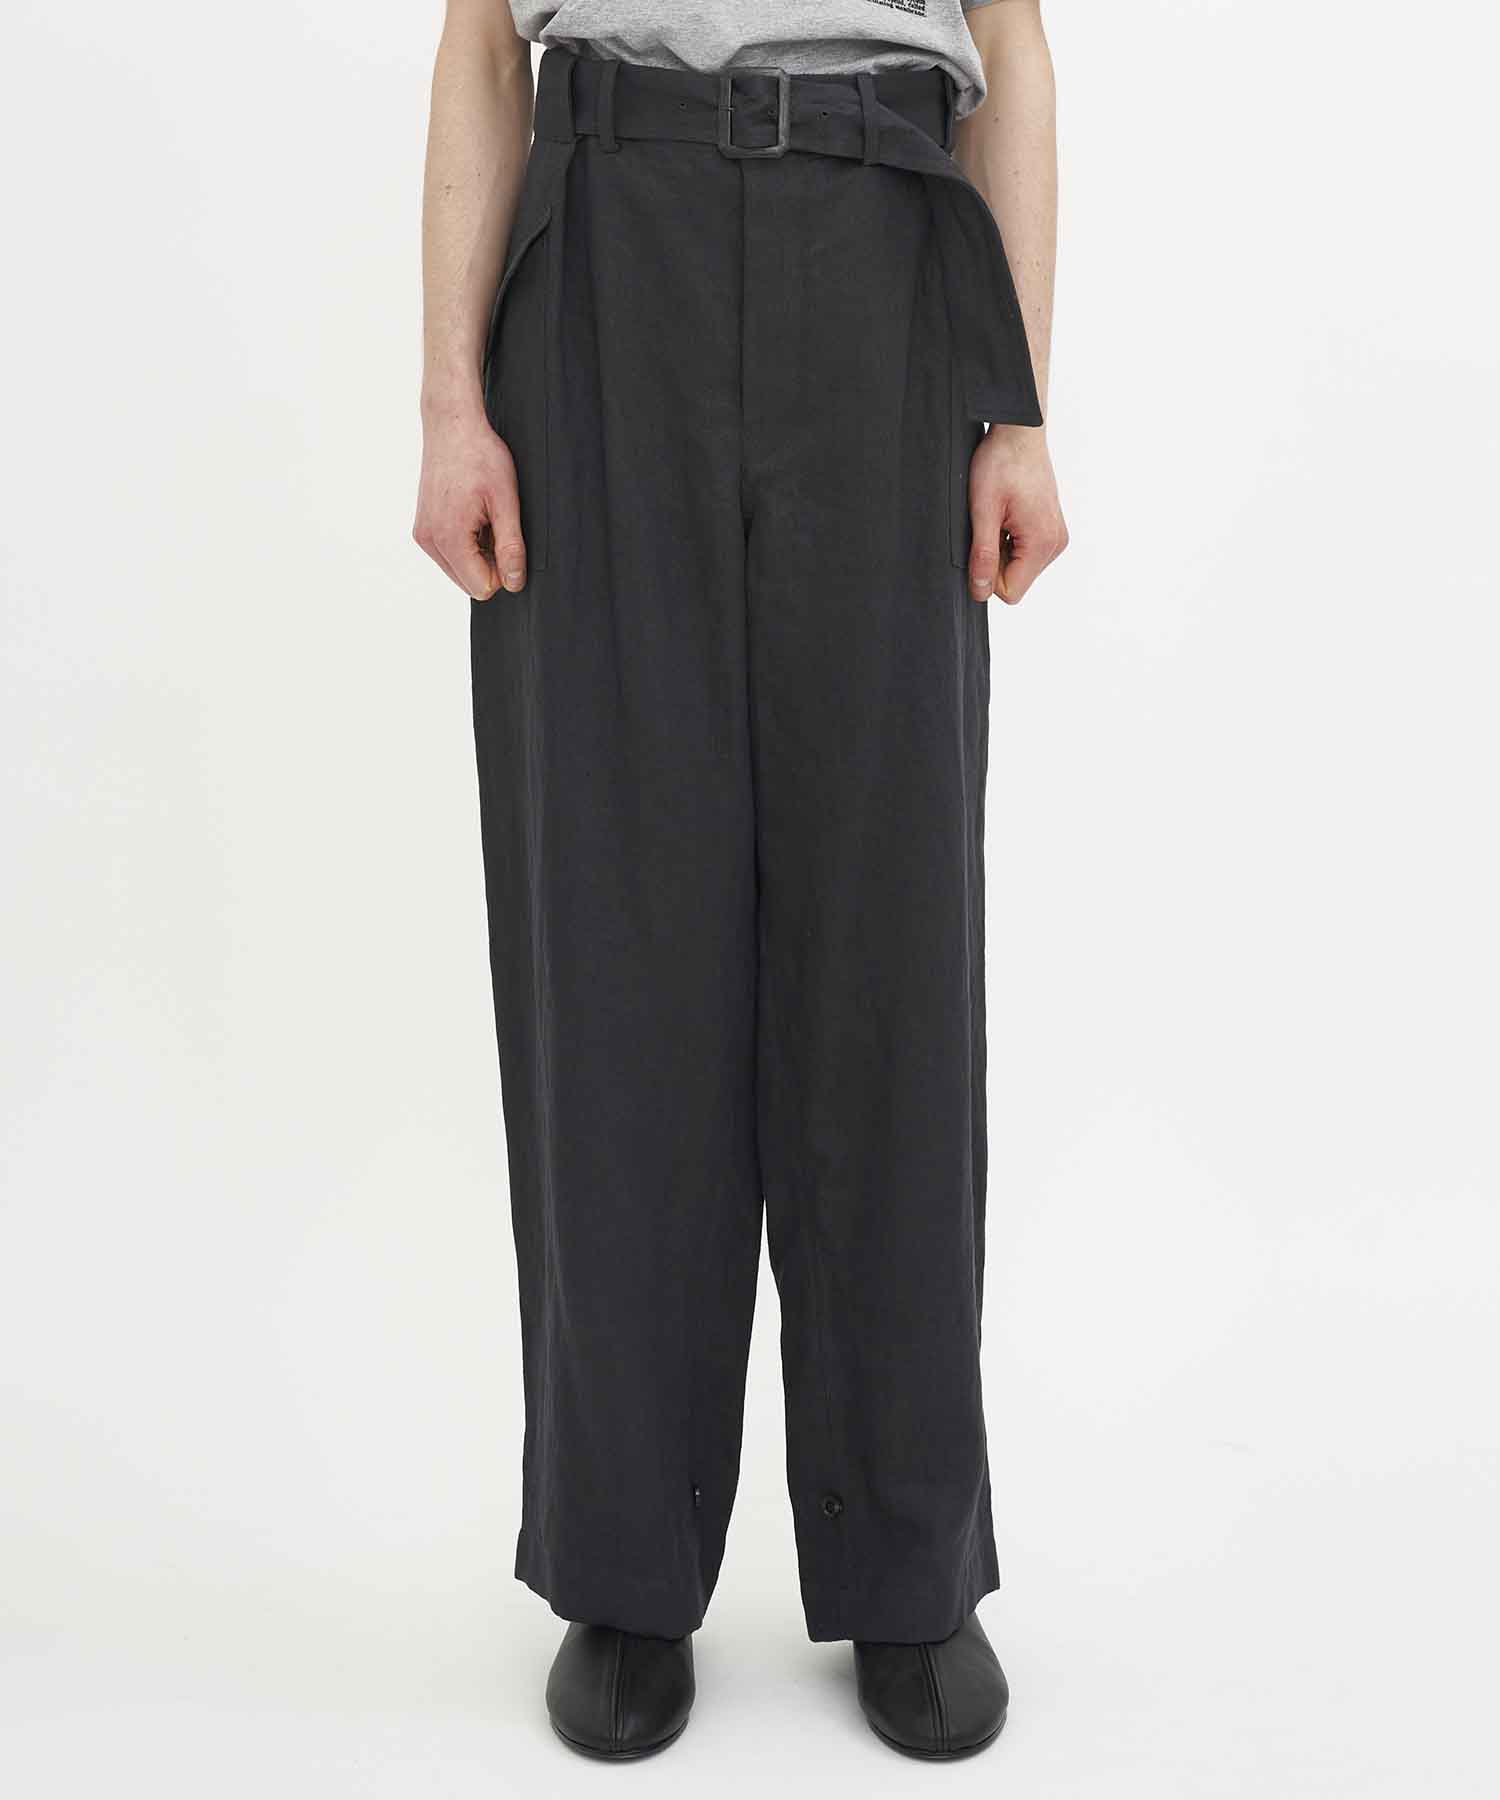 Linen chino / Field pants